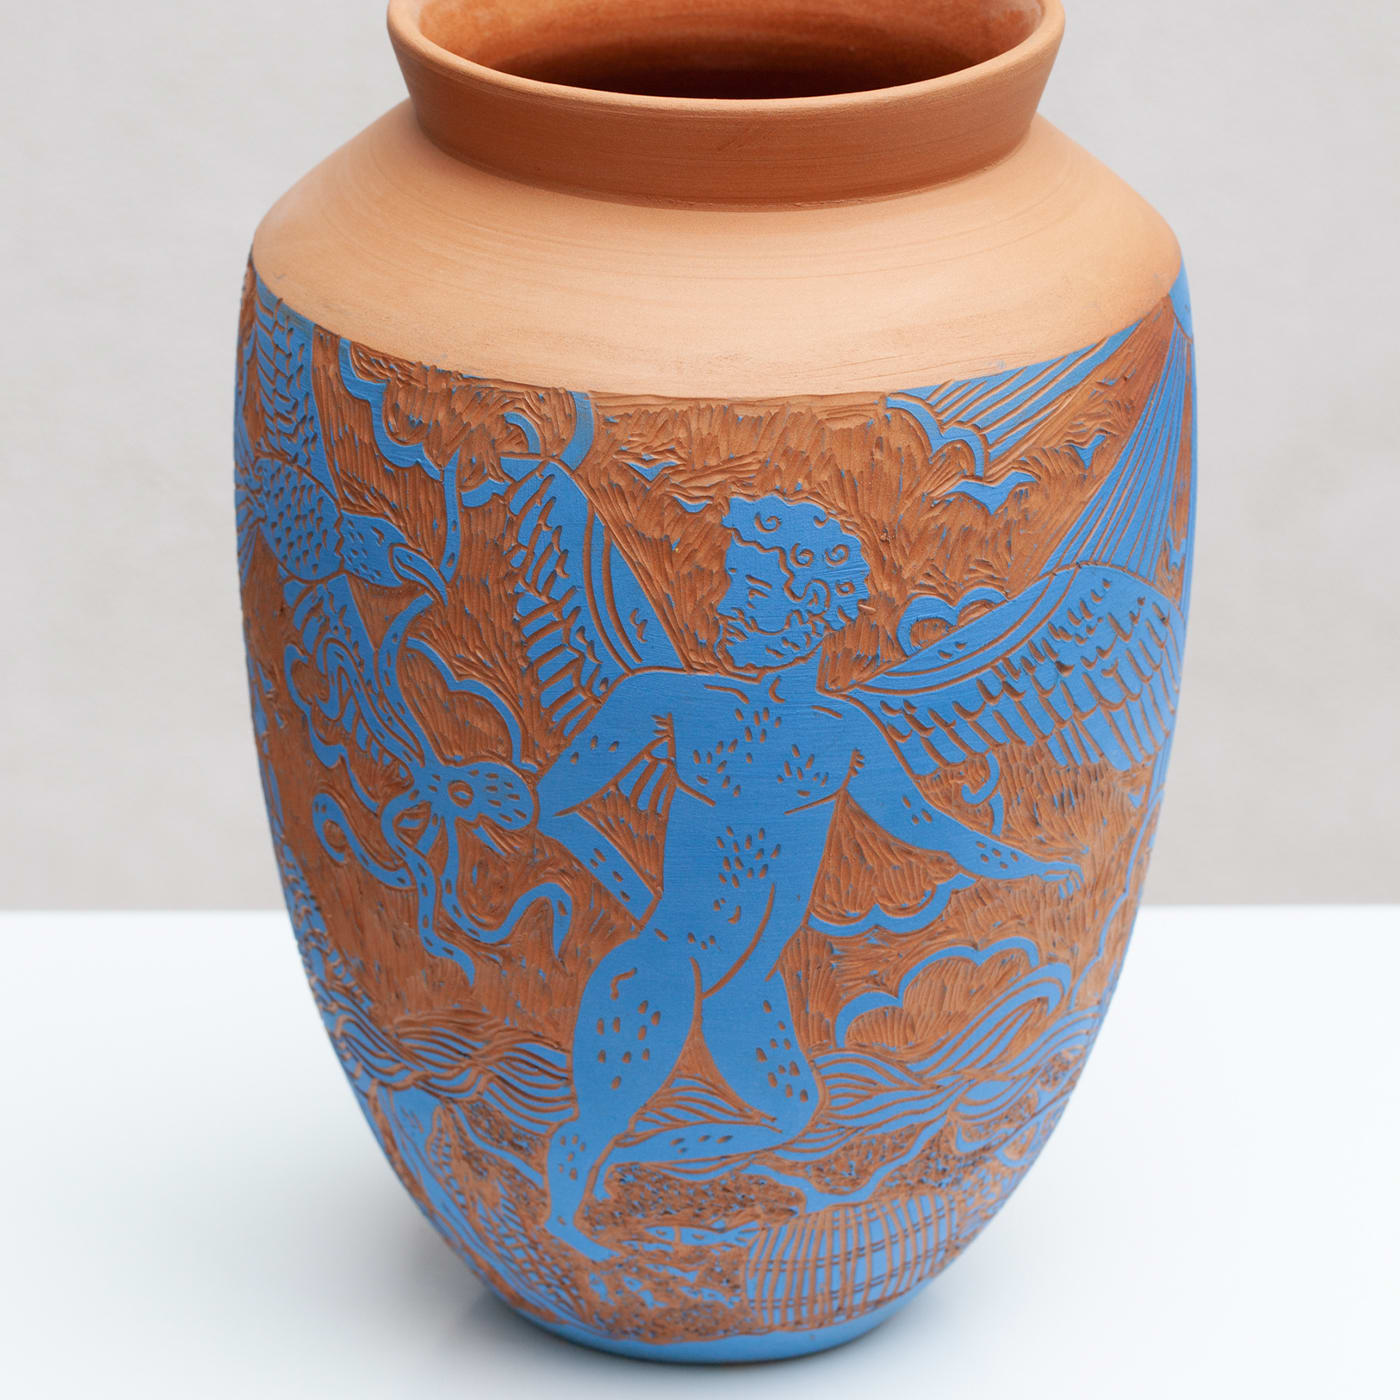 Il Pescatore di Granchi Blue Vase by Clara Holt and Chiara Zoppei - Clara Holt